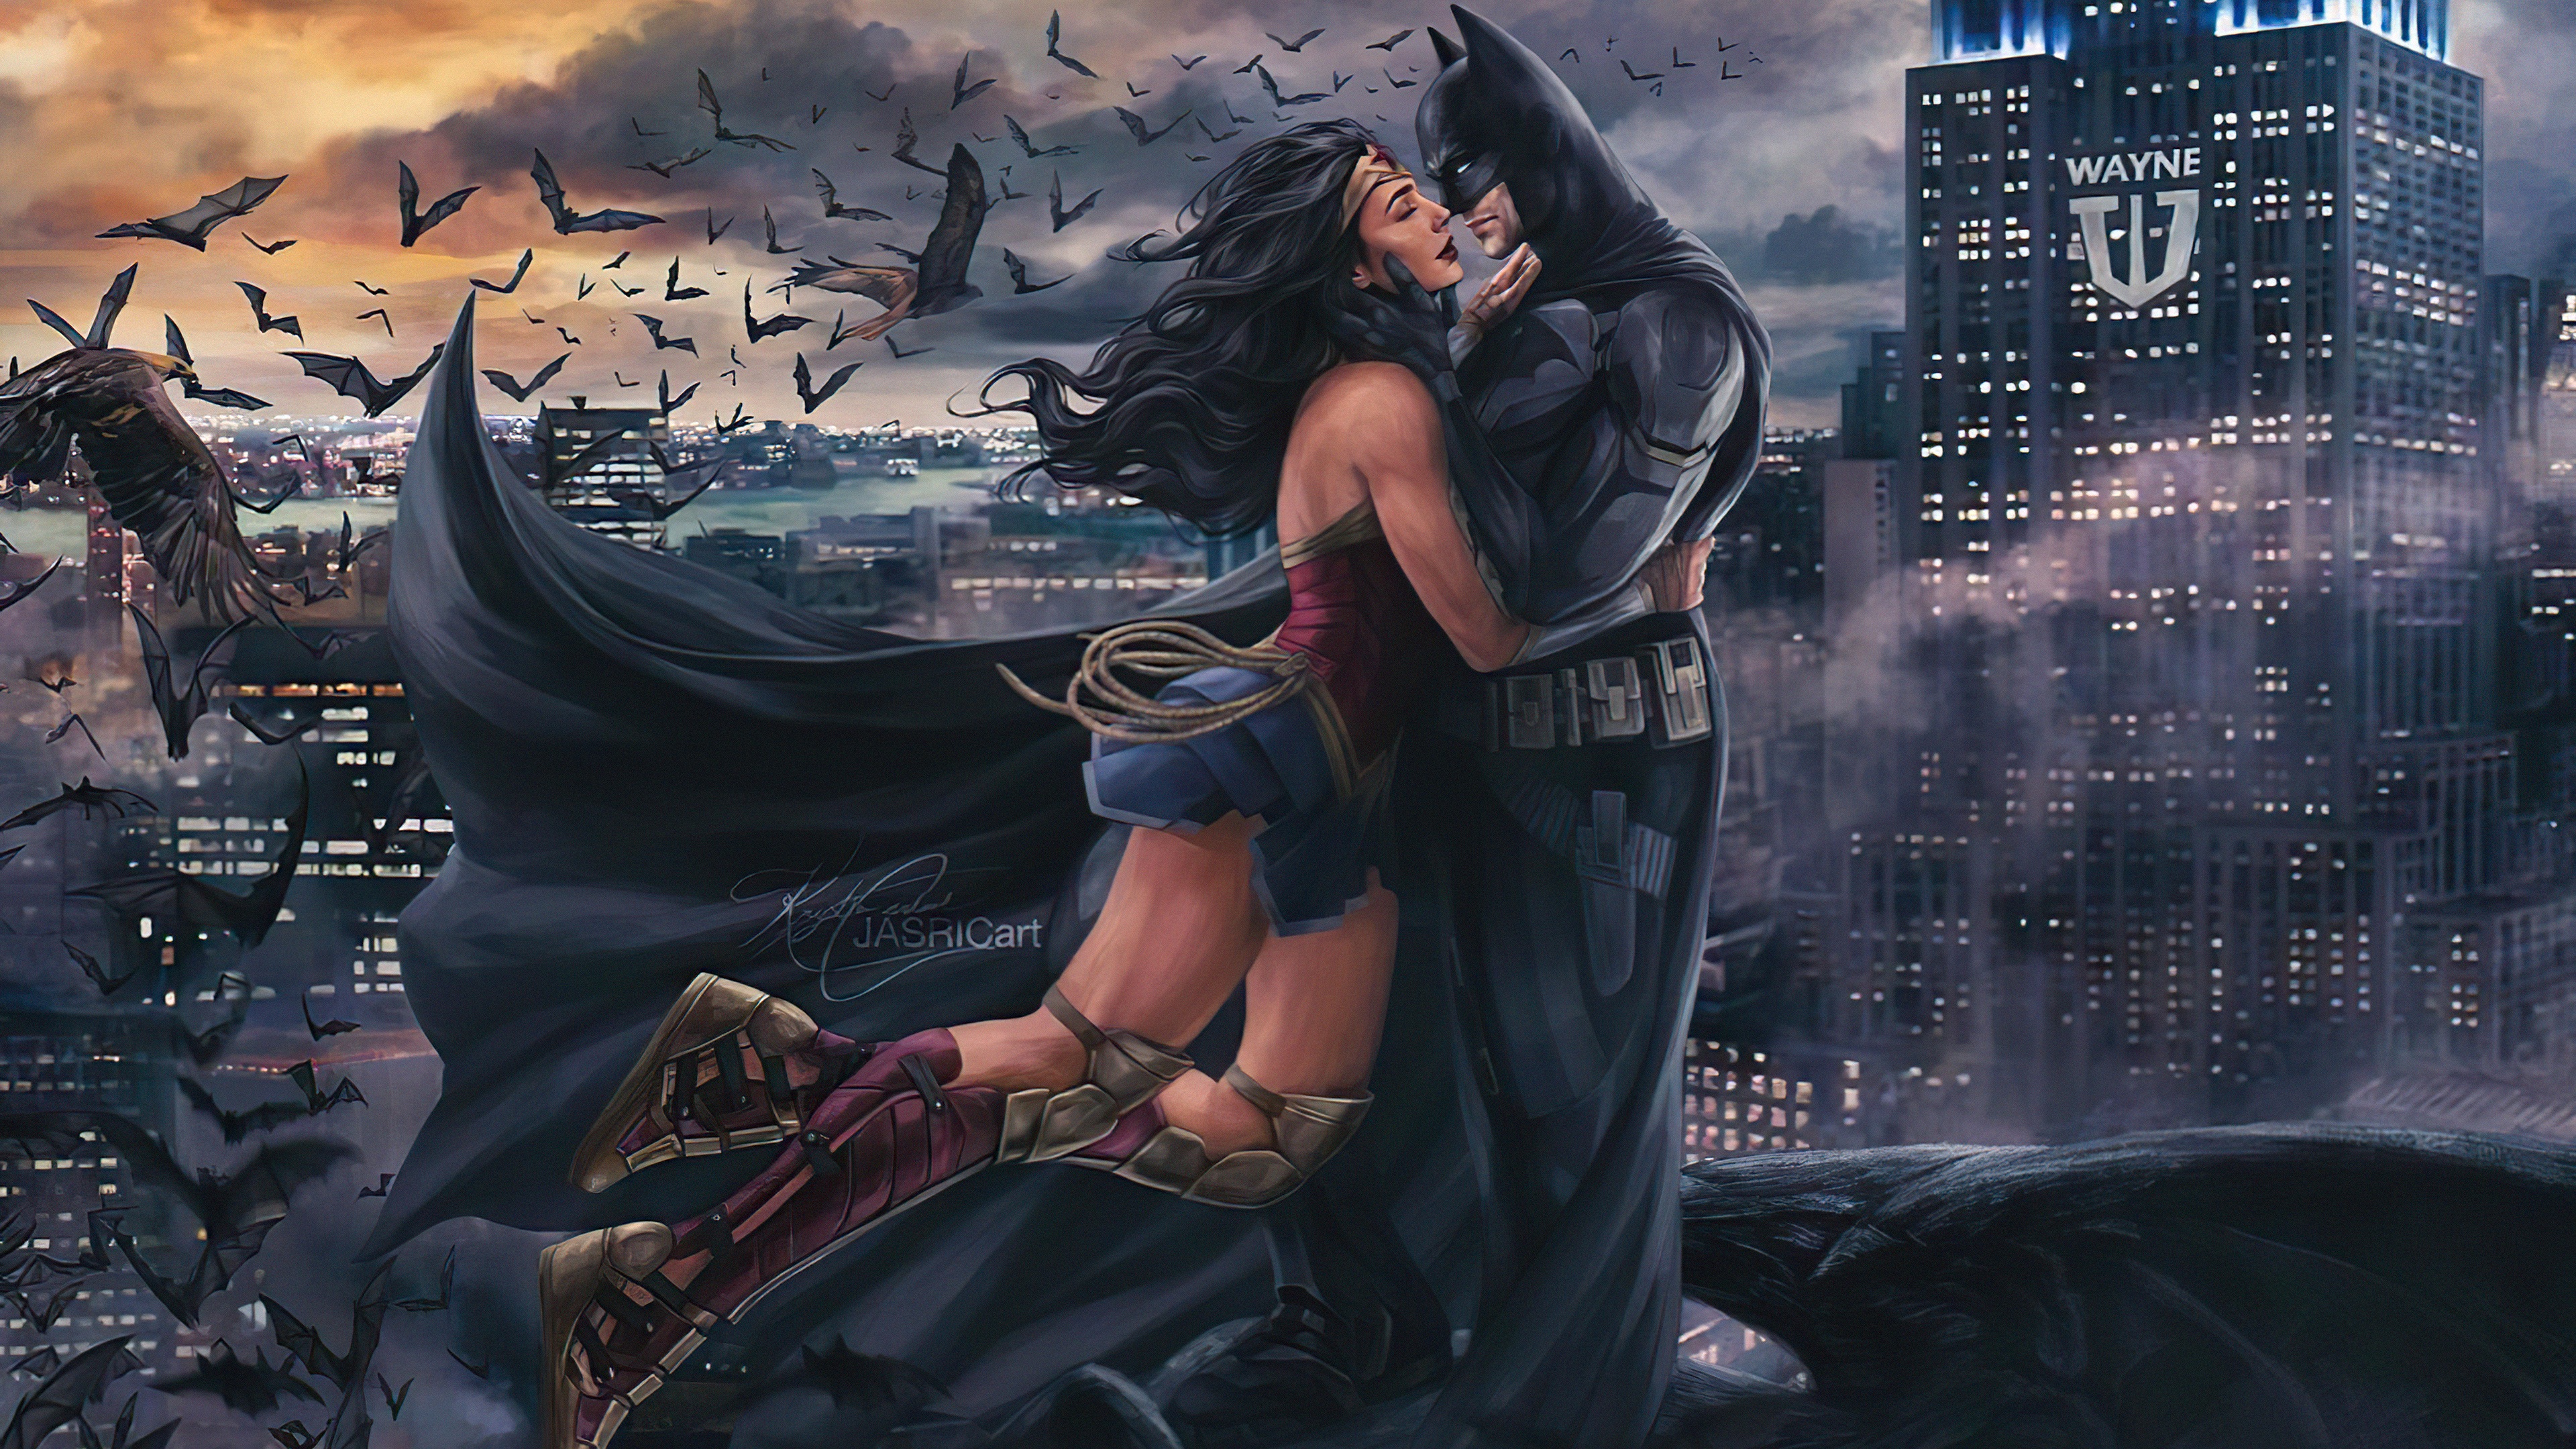 Wallpaper 4k Batman And Wonder Woman Romantic Moment 4k Wall